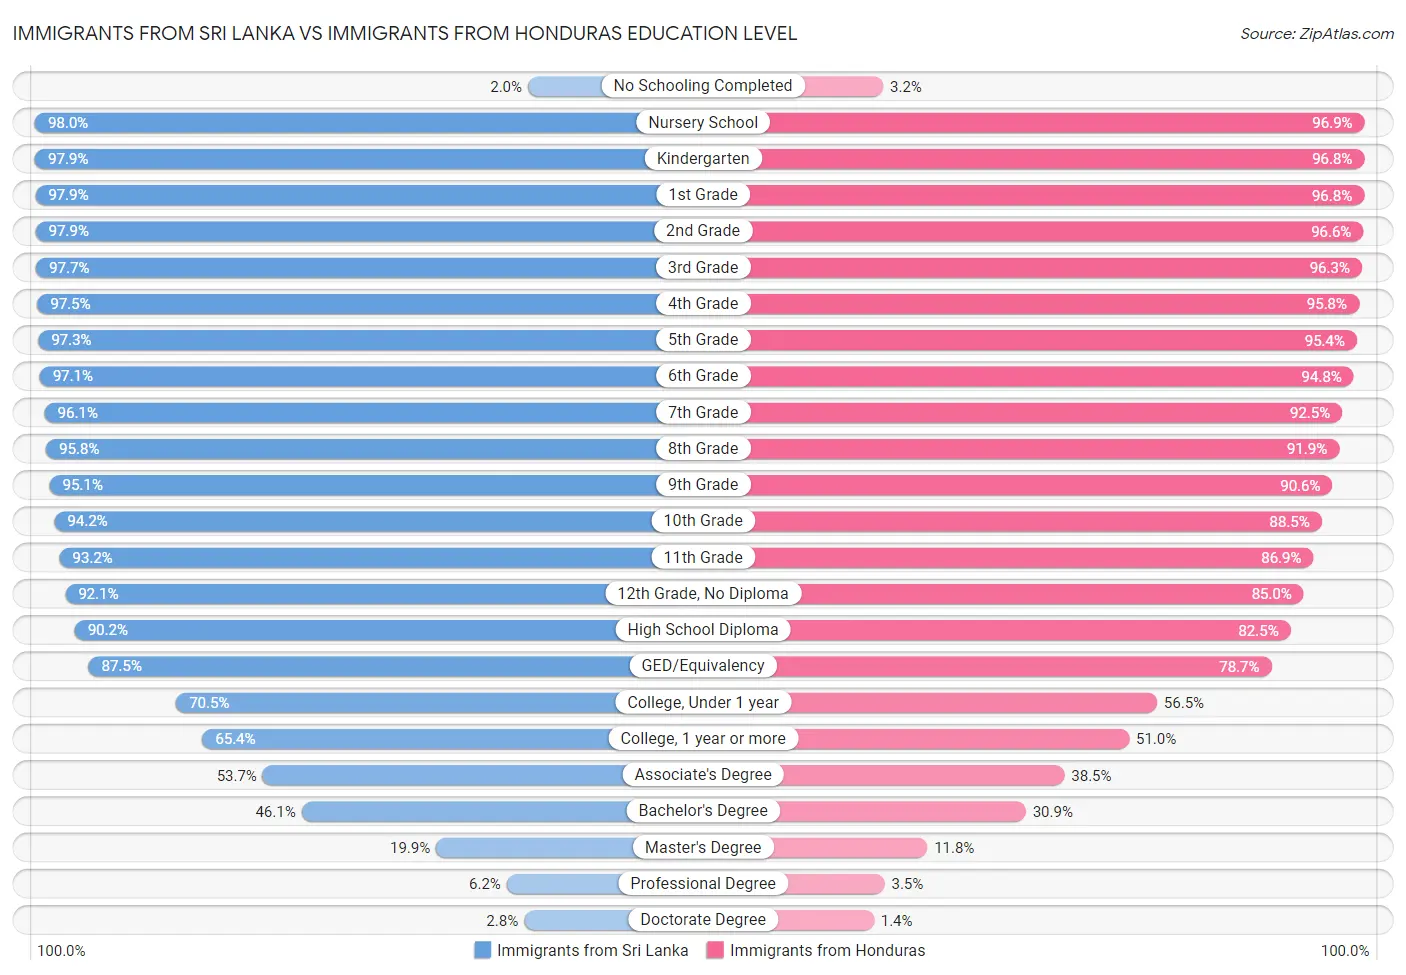 Immigrants from Sri Lanka vs Immigrants from Honduras Education Level